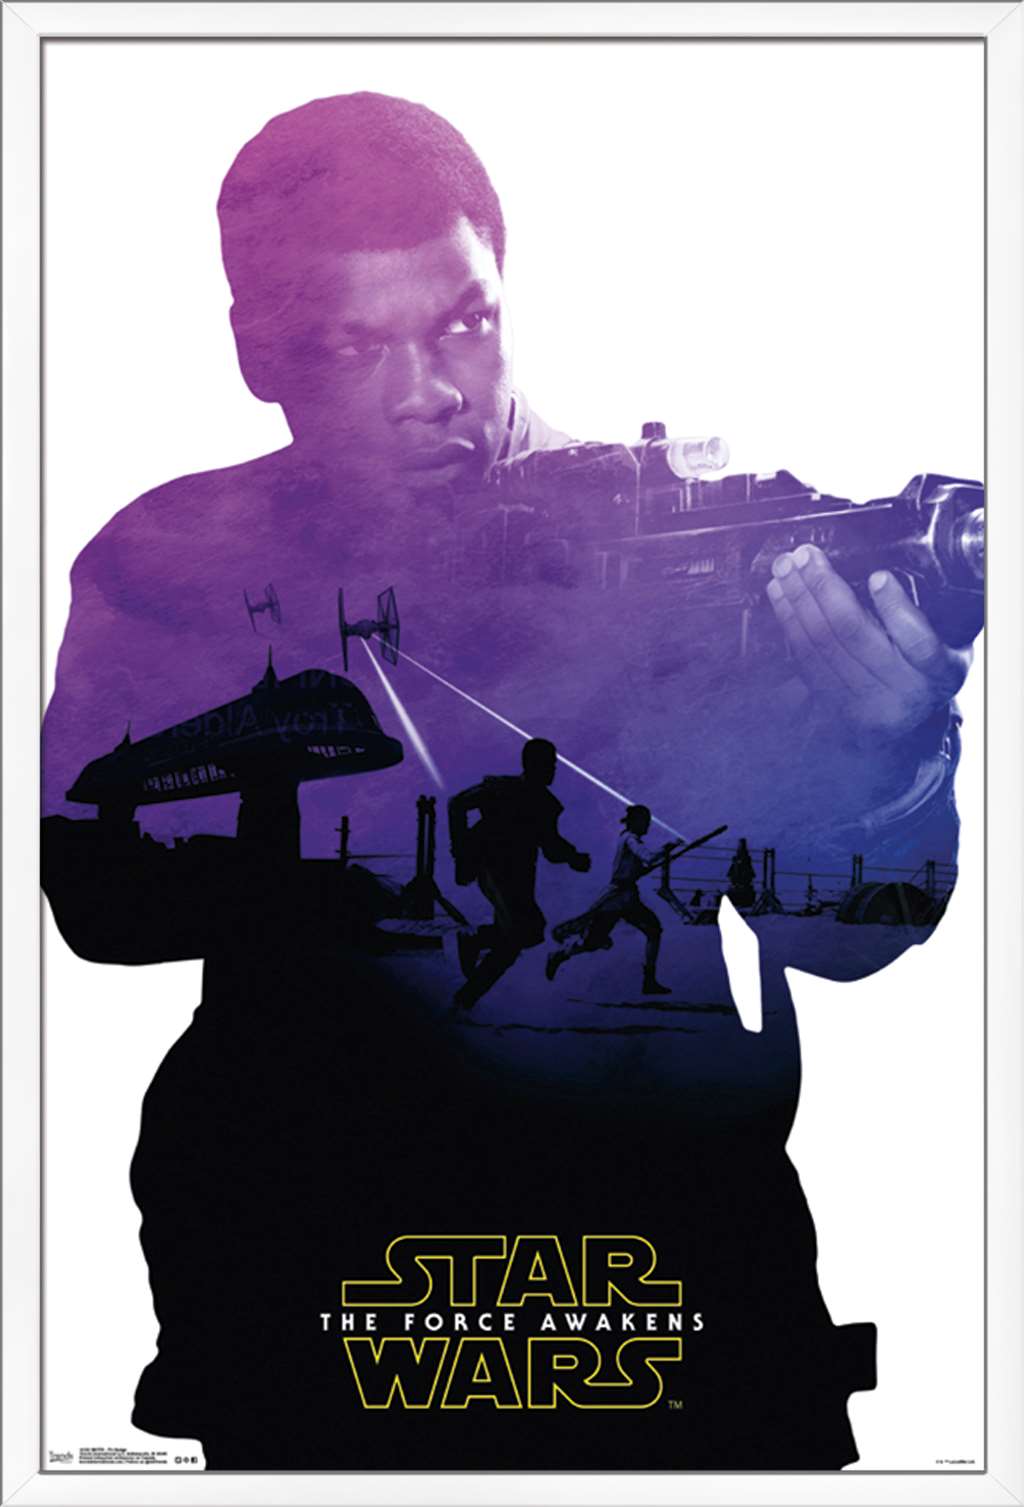 Star Wars: The Force Awakens - Finn Badge Wall Poster, 22.375" x 34", Framed - image 1 of 2